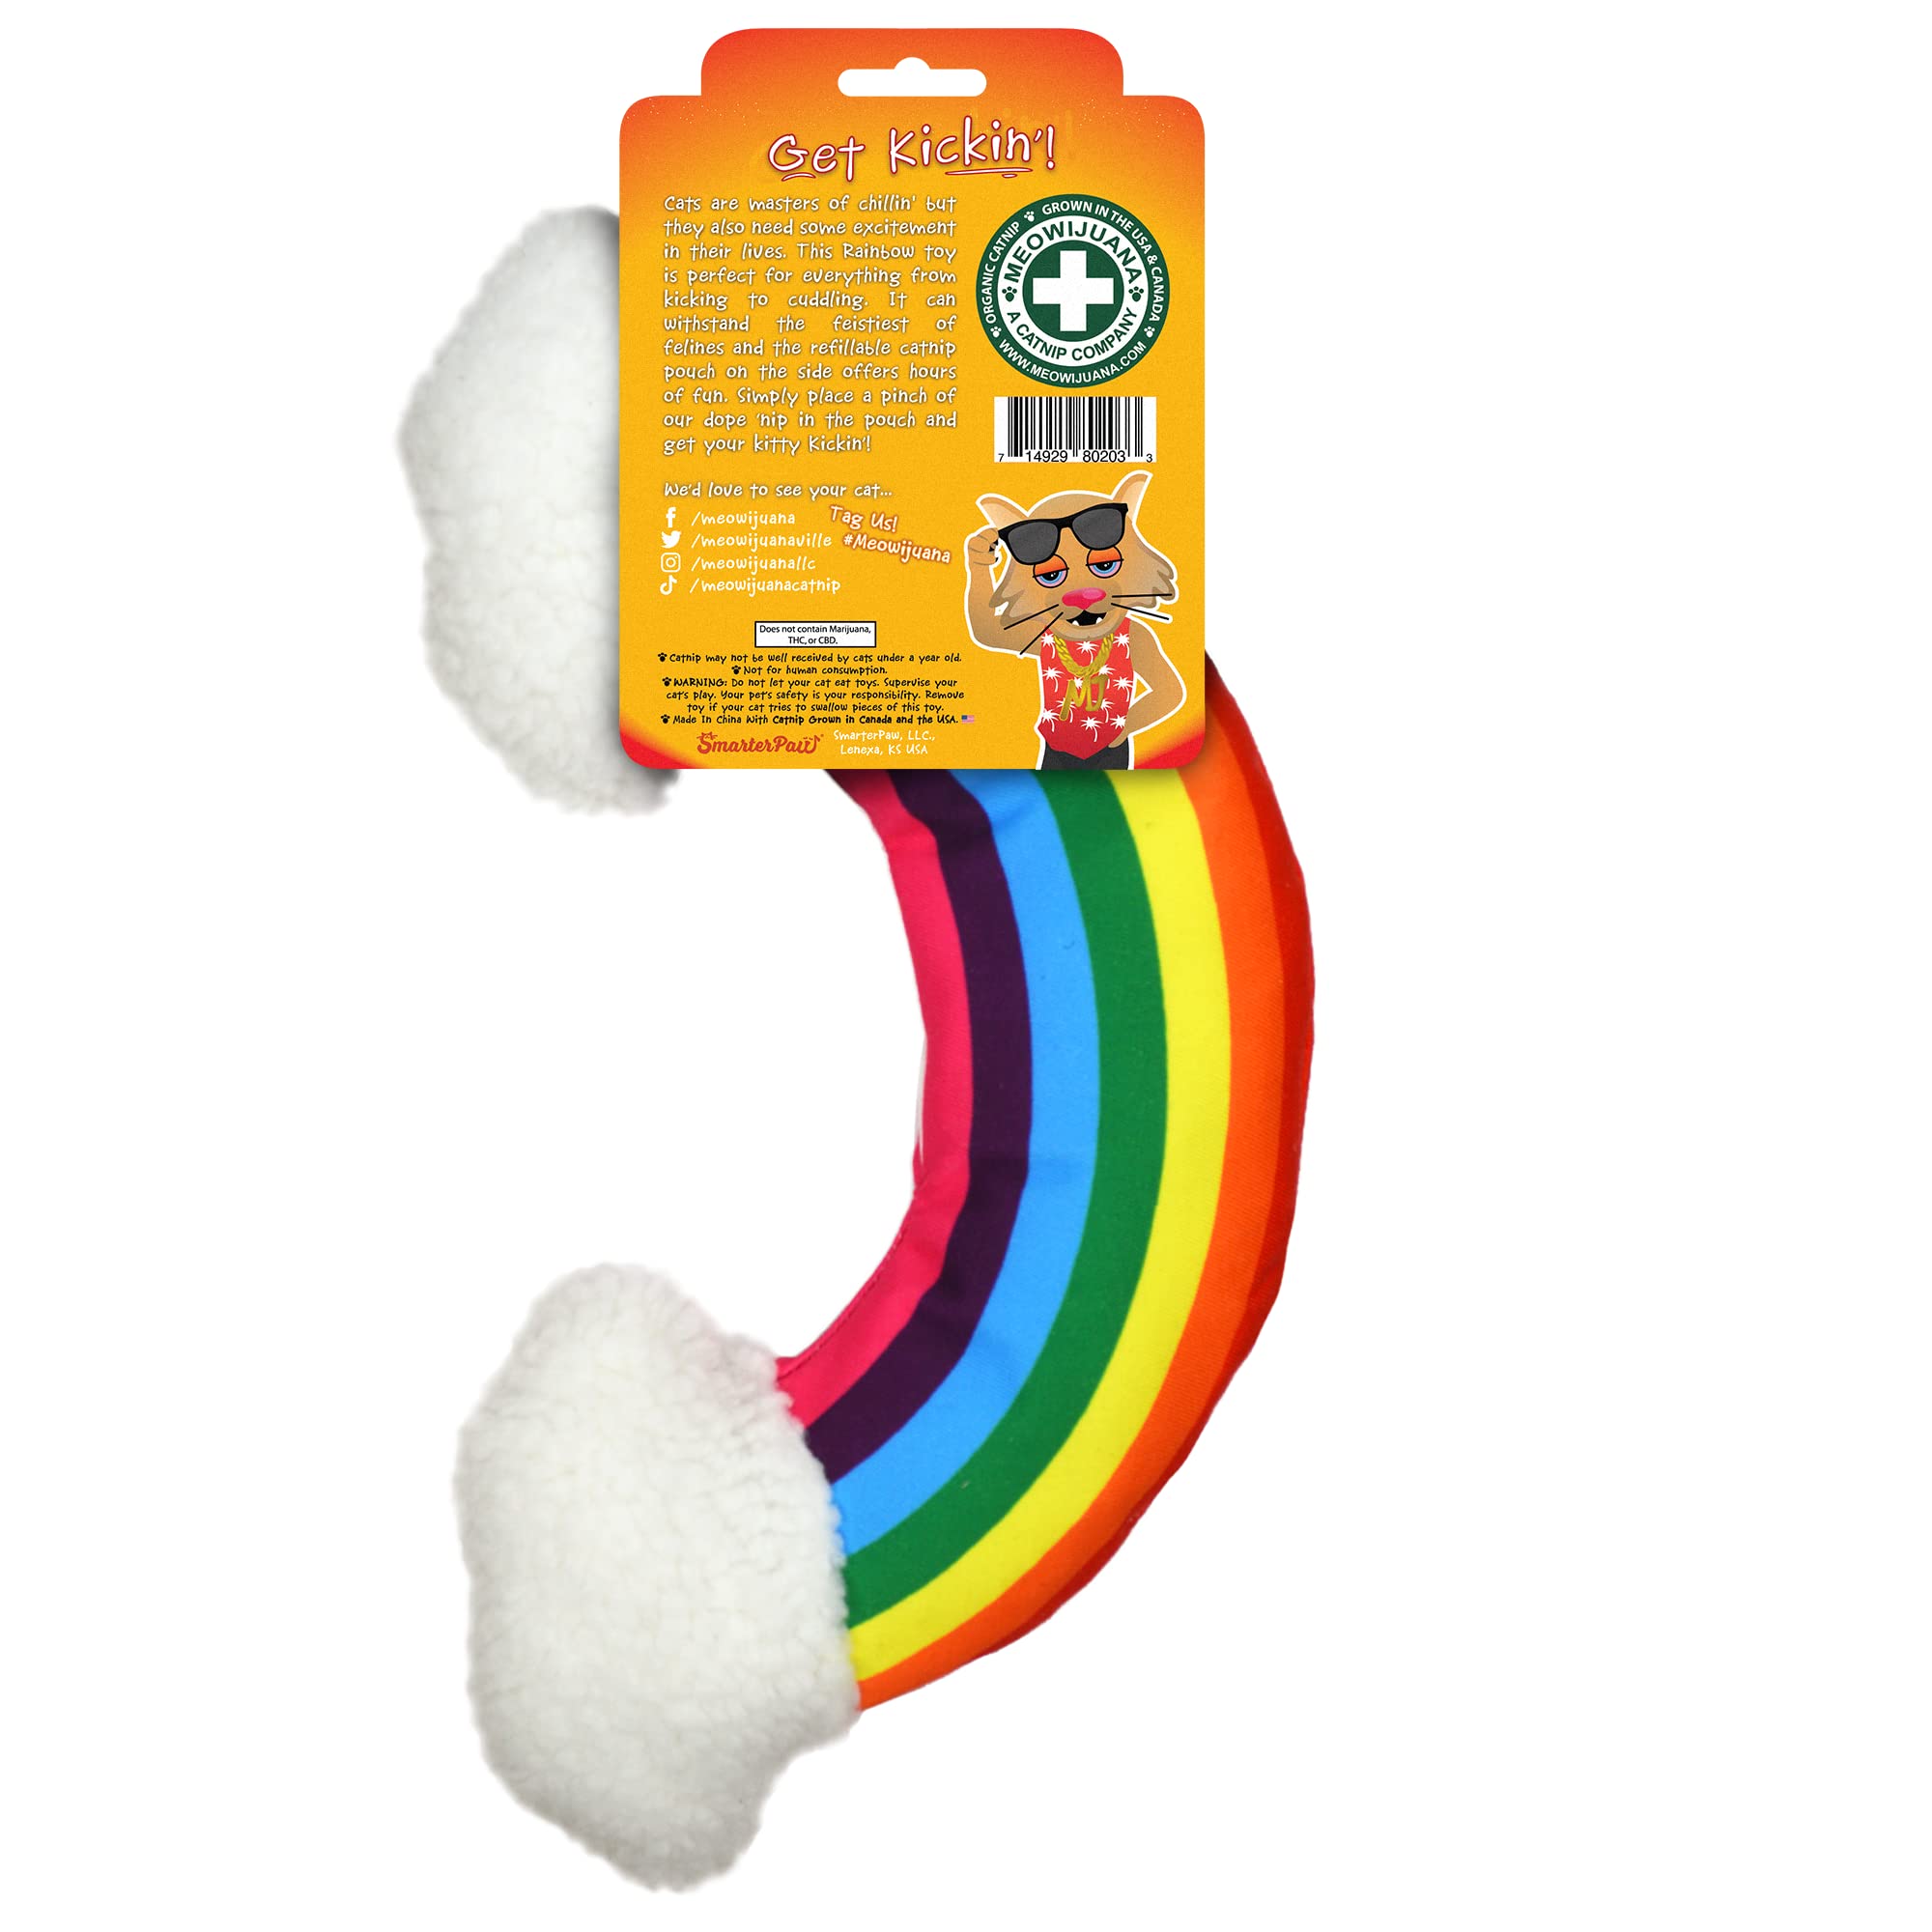 Meowijuana | Rainbow Bundle | Get Kickin' Refillable Rainbow Toy and Cloud 9 Catnip Blend | Promotes Play and Cat Health | Includes Organic Catnip